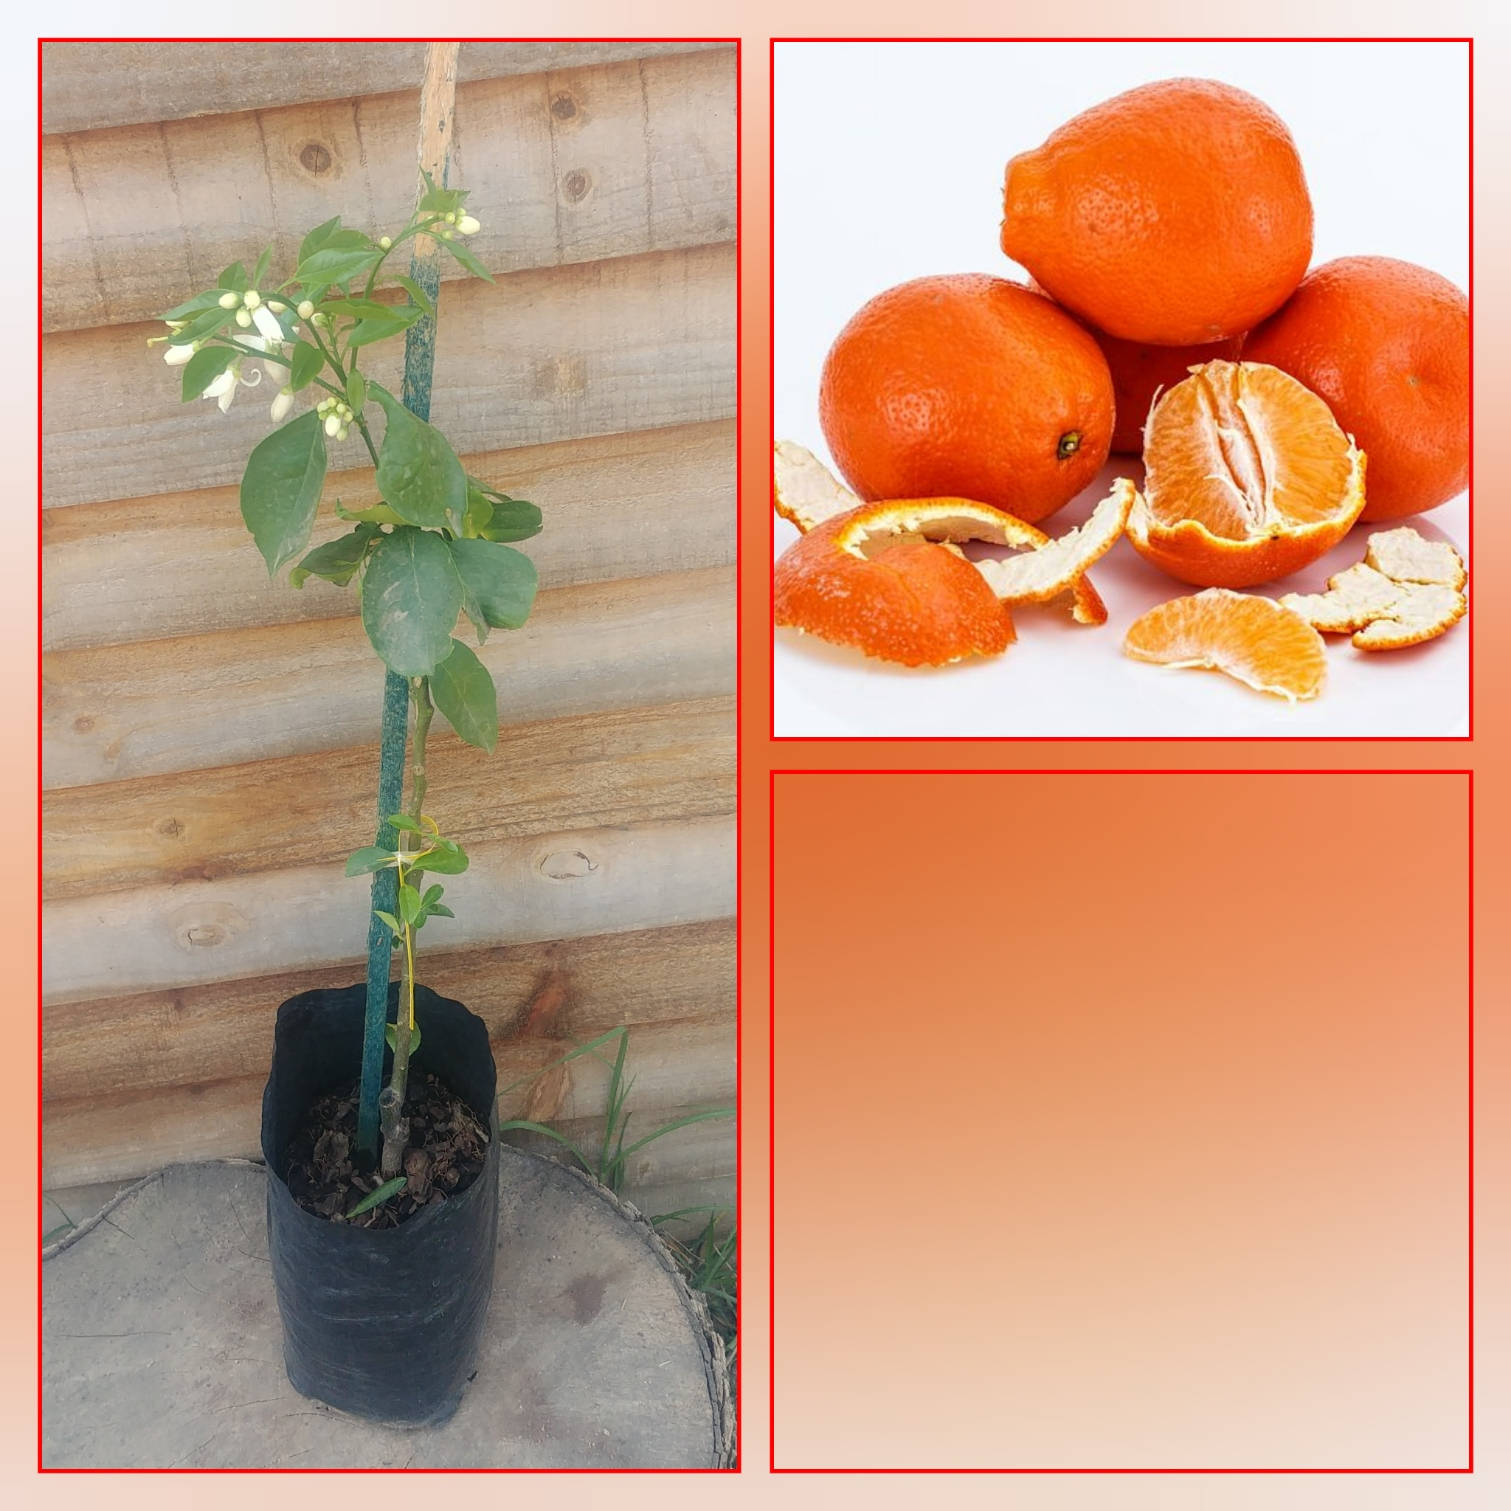 Orange Tangelo Fruits And Plant Wallpaper